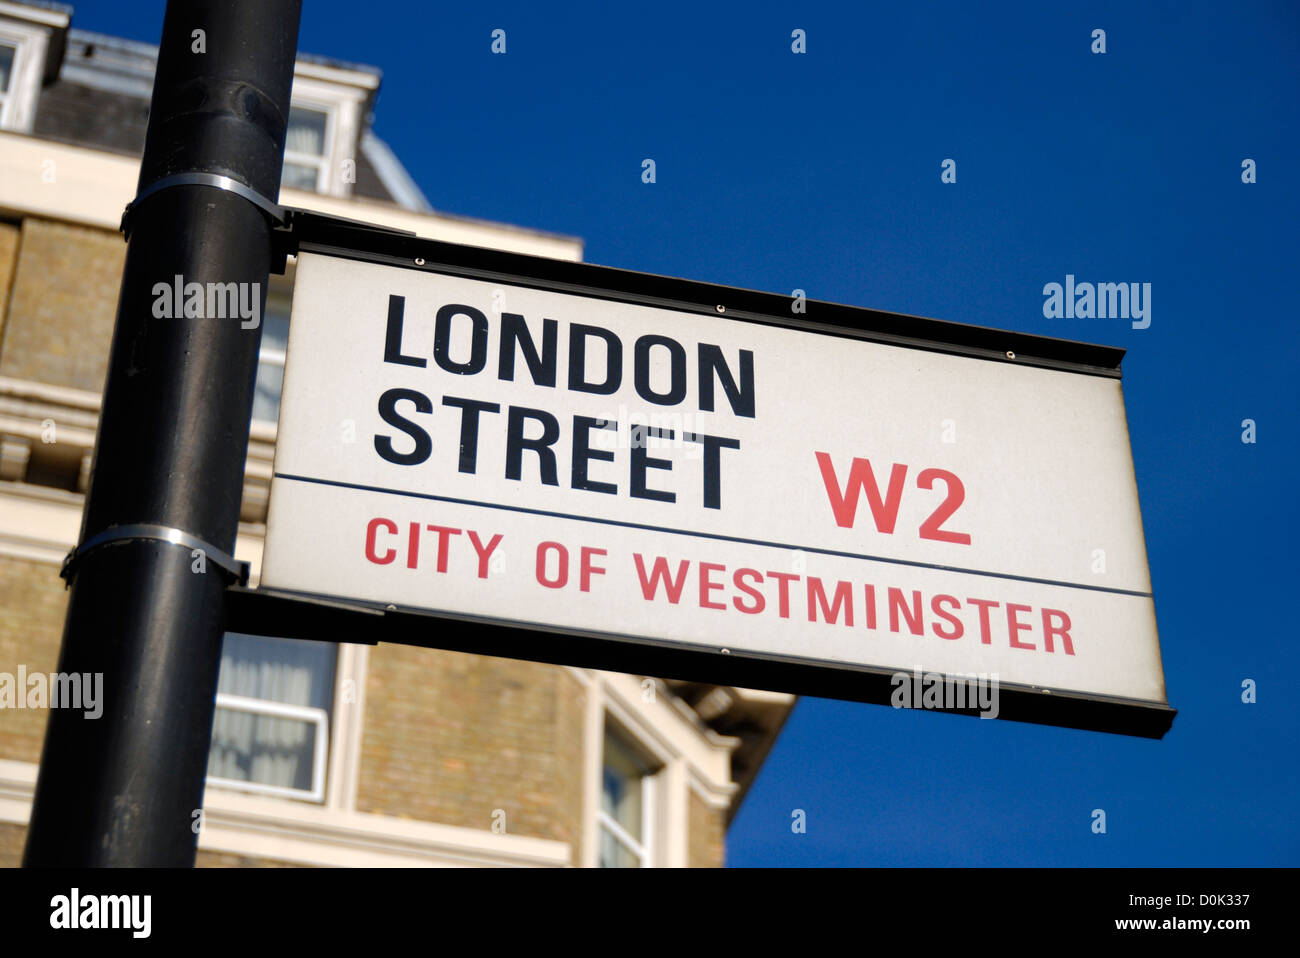 London Street W2 City of Westminster strada segno. Foto Stock